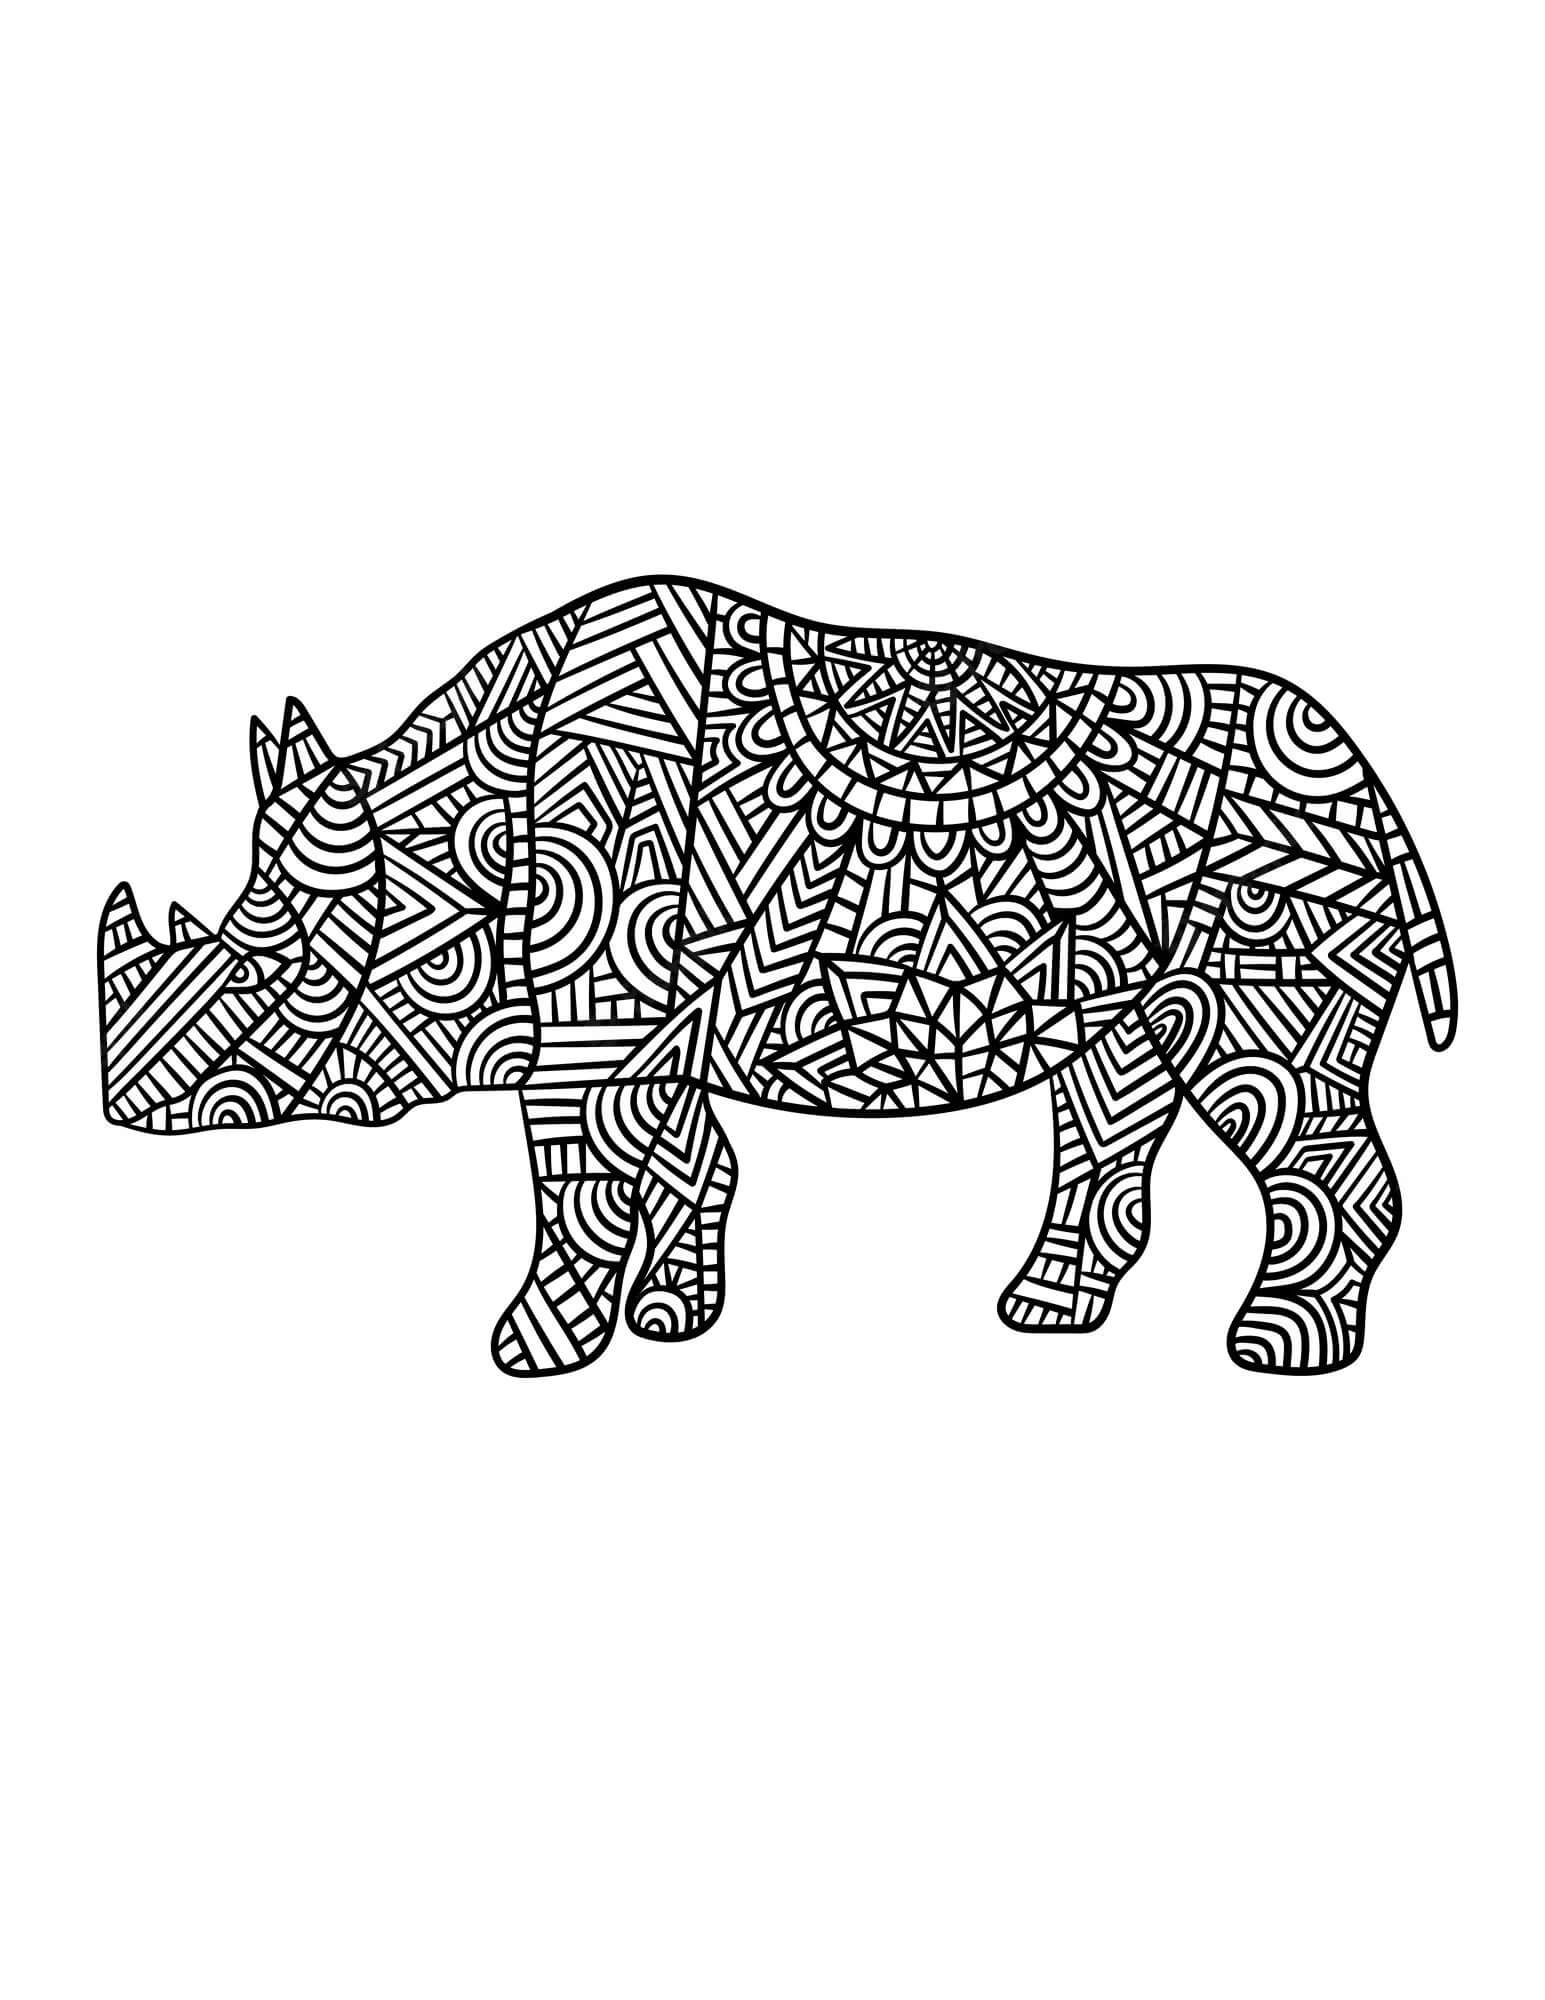 Mandala Rhino Coloring Page - Sheet 1 Mandalas